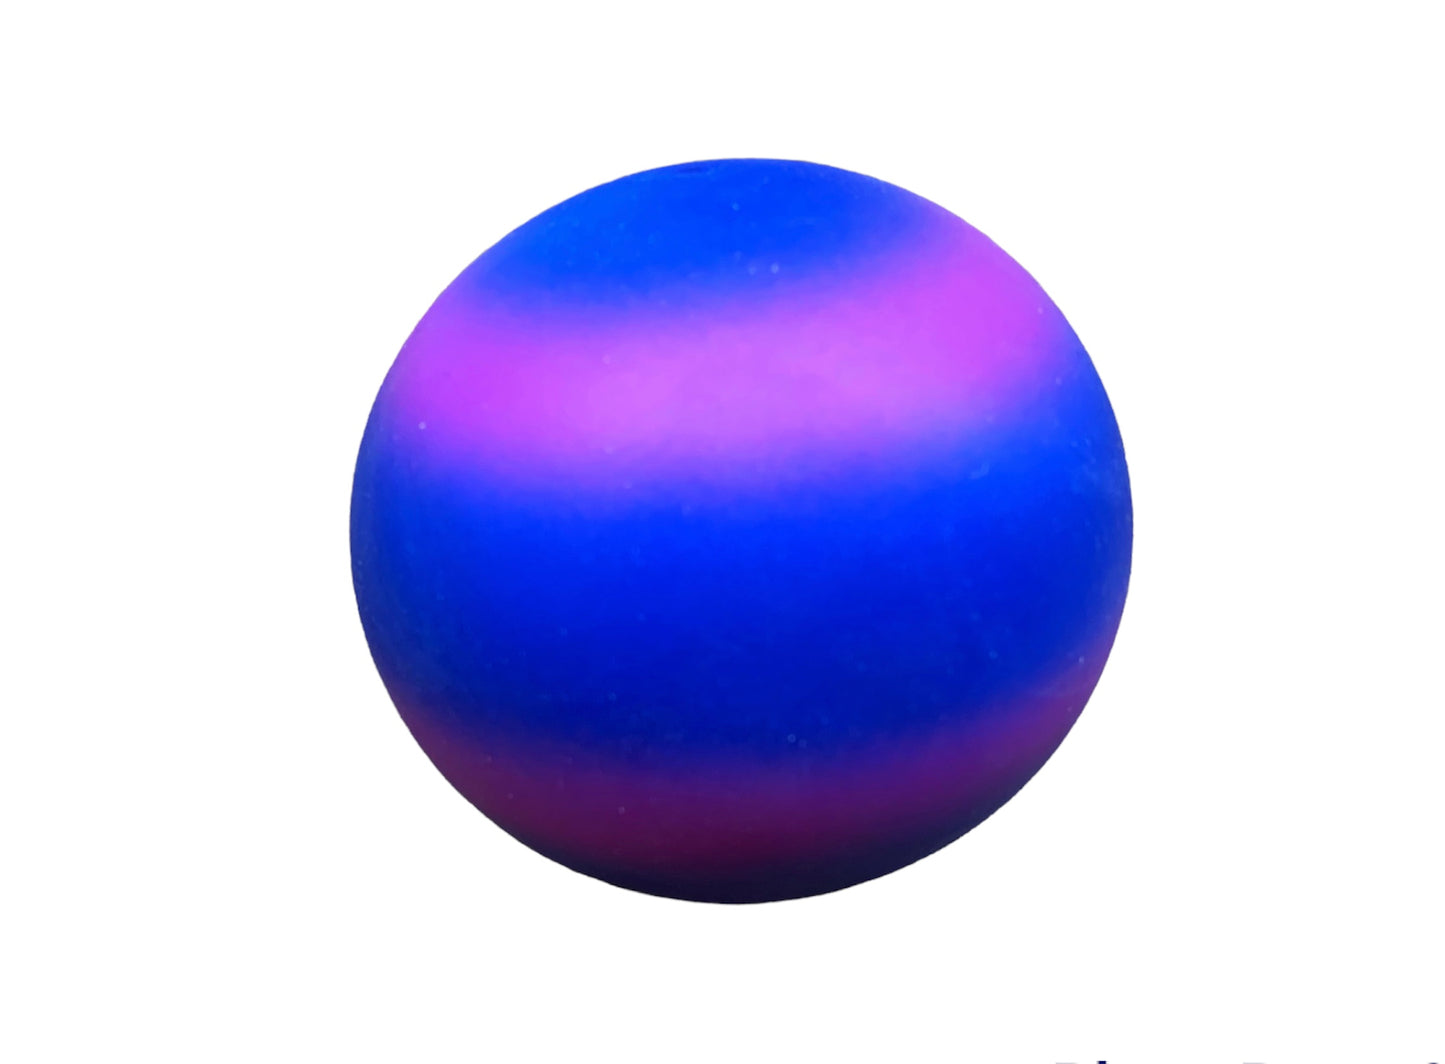 Multi-Coloured Squeeze Ball